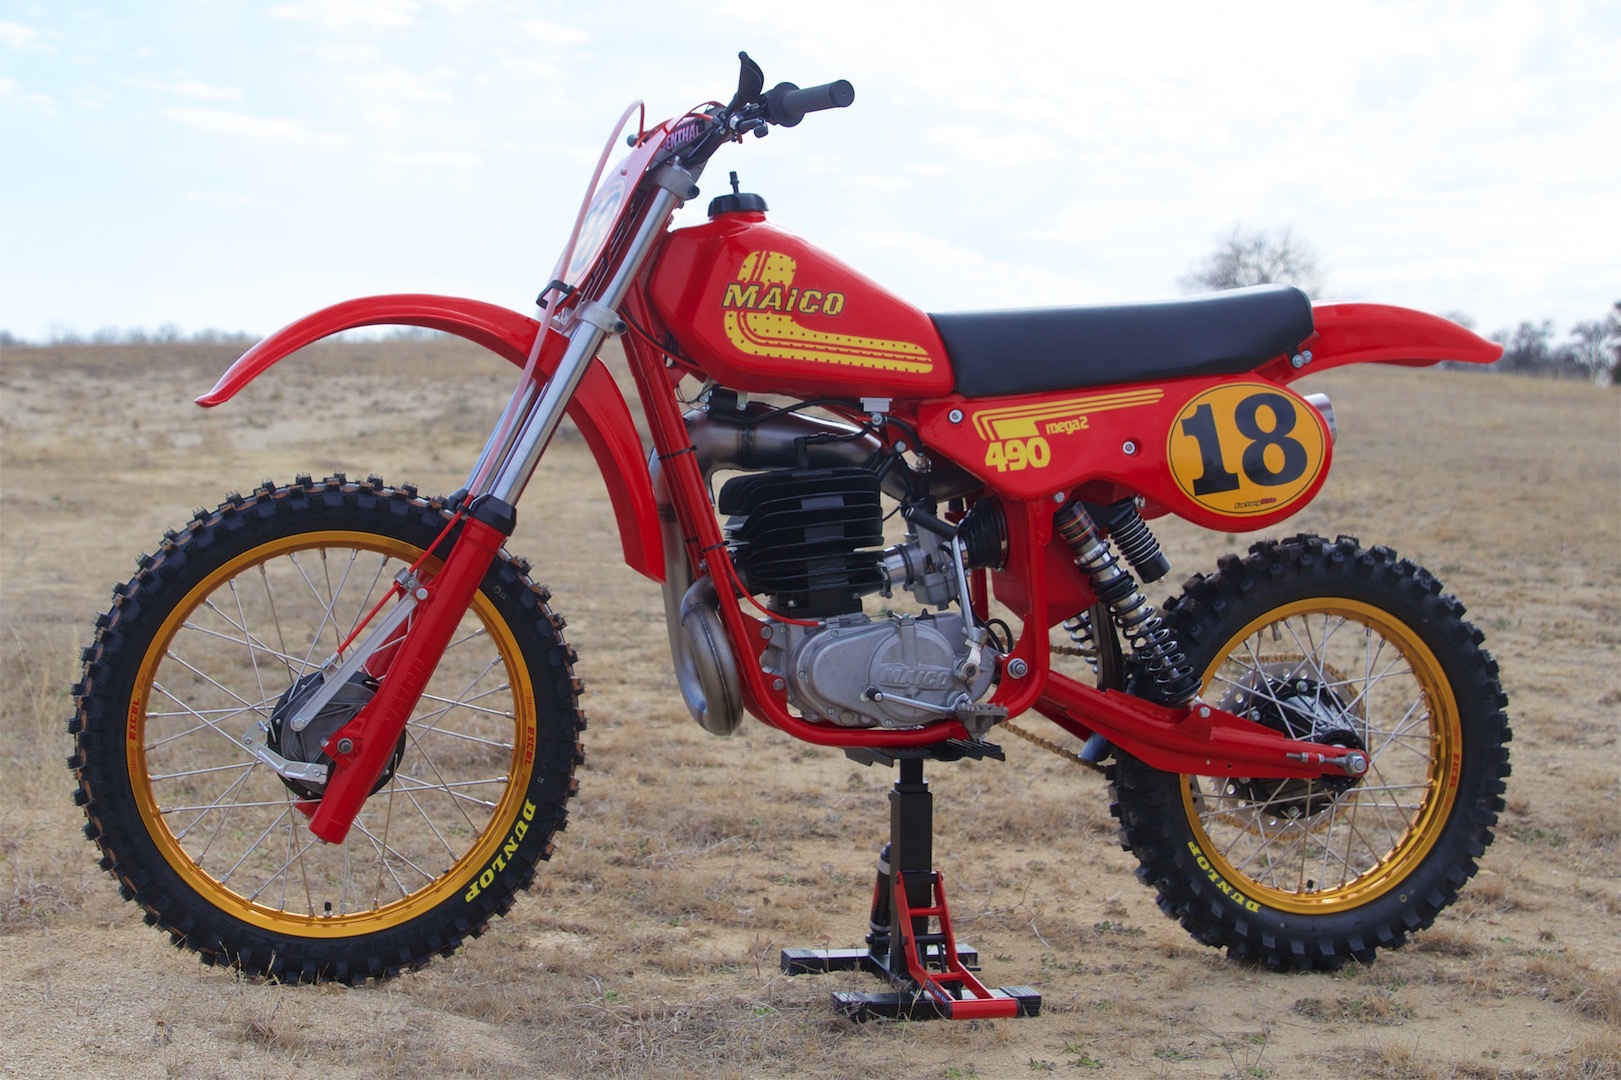 a ’81 Maico Mega 2 motocross motorcycle